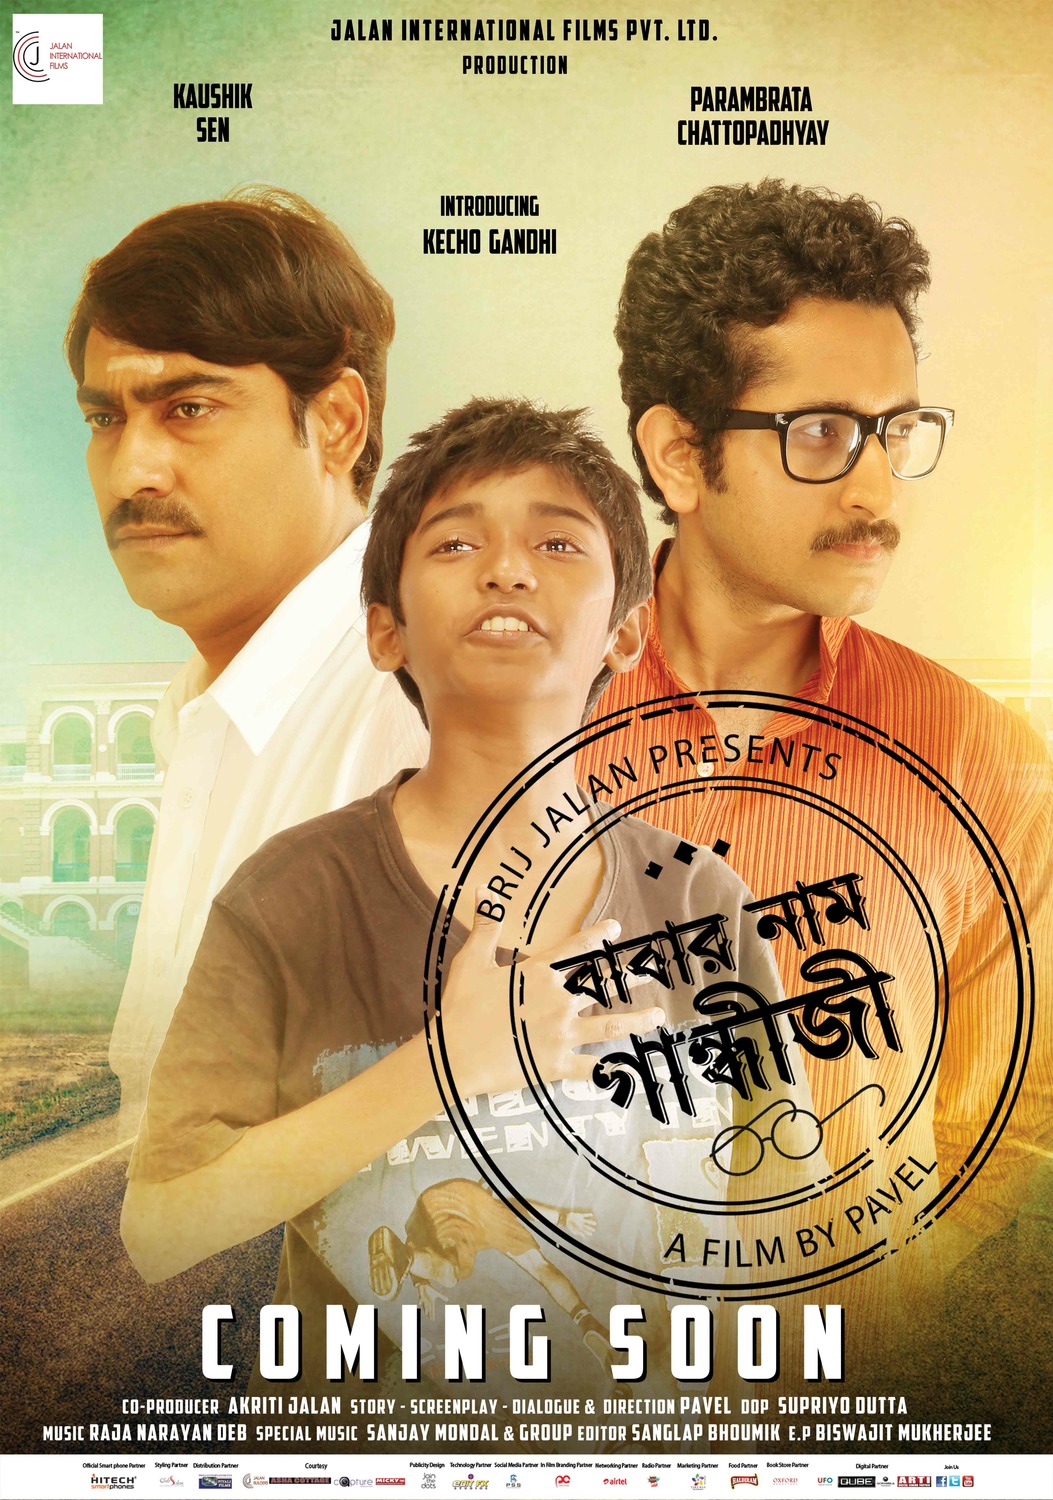 Extra Large Movie Poster Image for Babar Naam Gandhiji (#1 of 5)